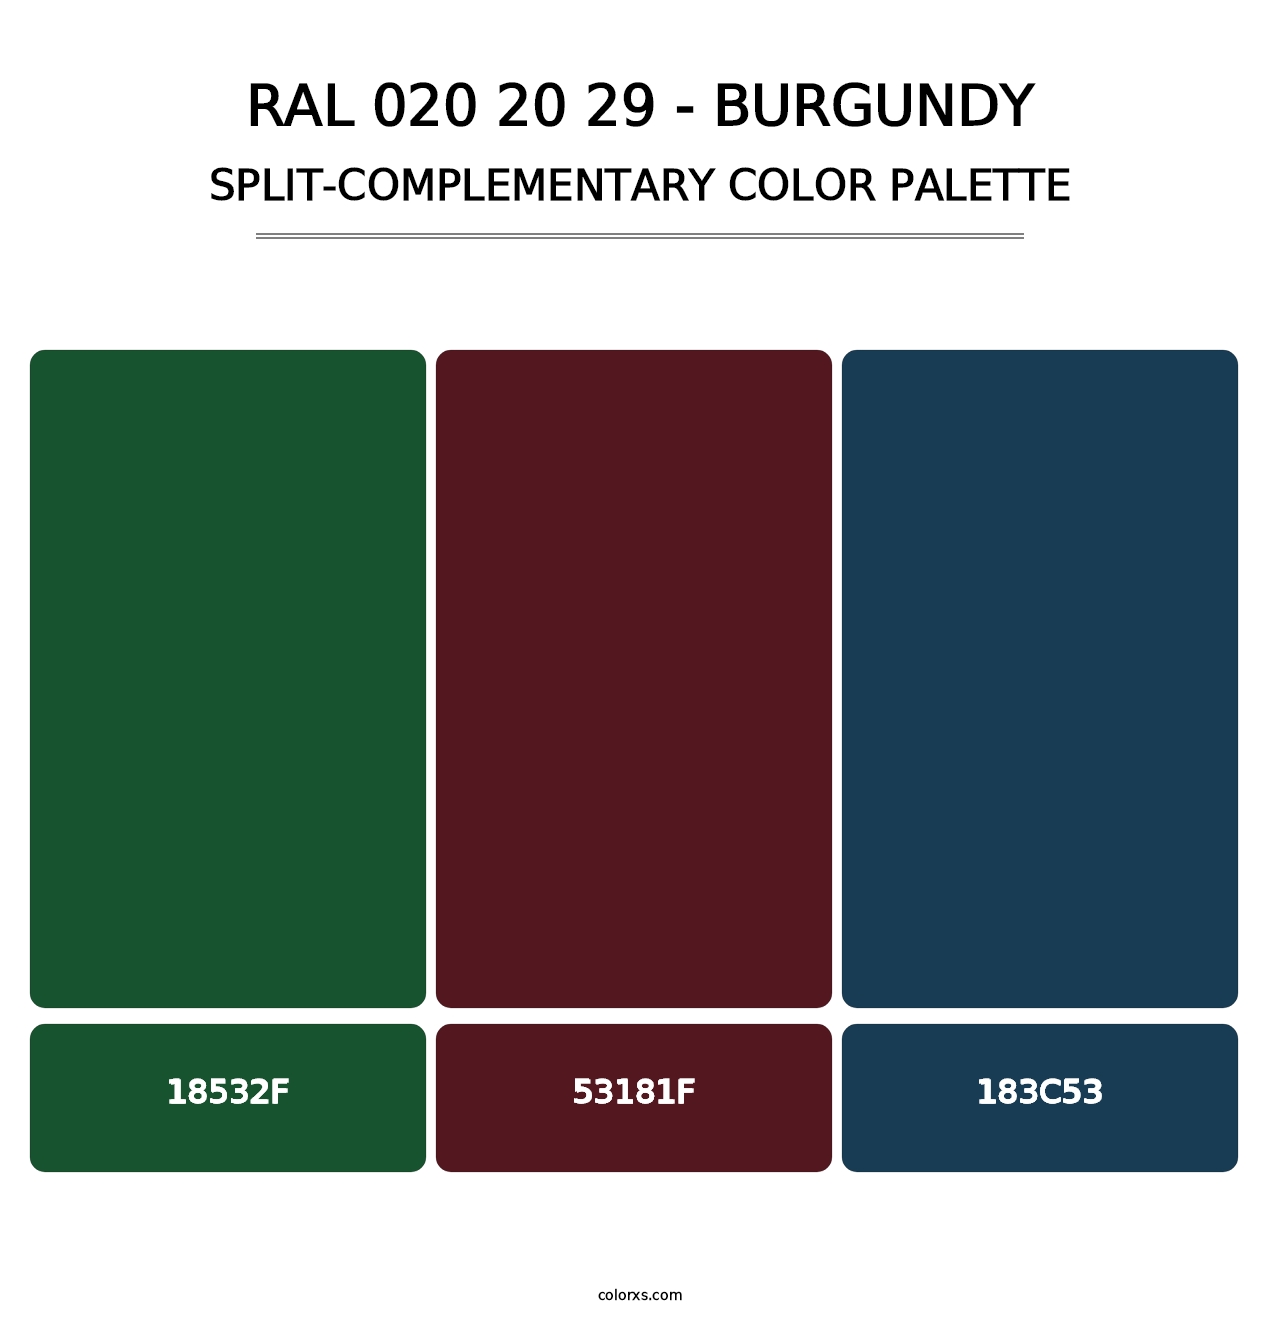 RAL 020 20 29 - Burgundy - Split-Complementary Color Palette